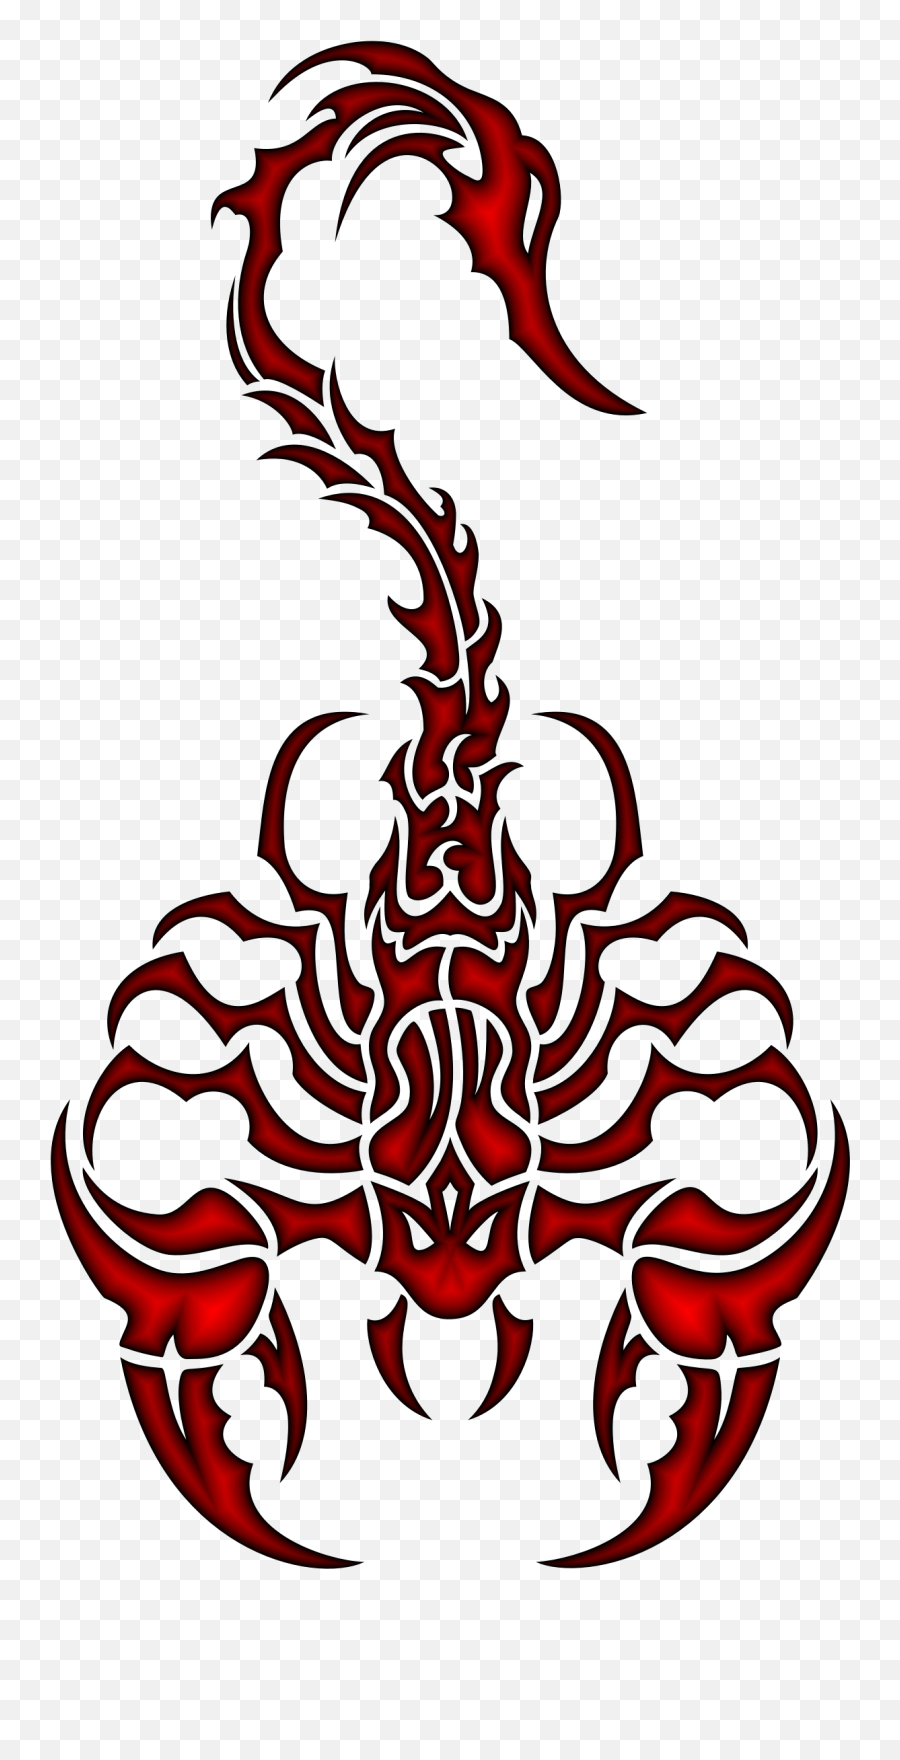 Download This Free Icons Png Design Of Sleek Tribal Scorpion - Scorpio Symbol,Tribal Design Png